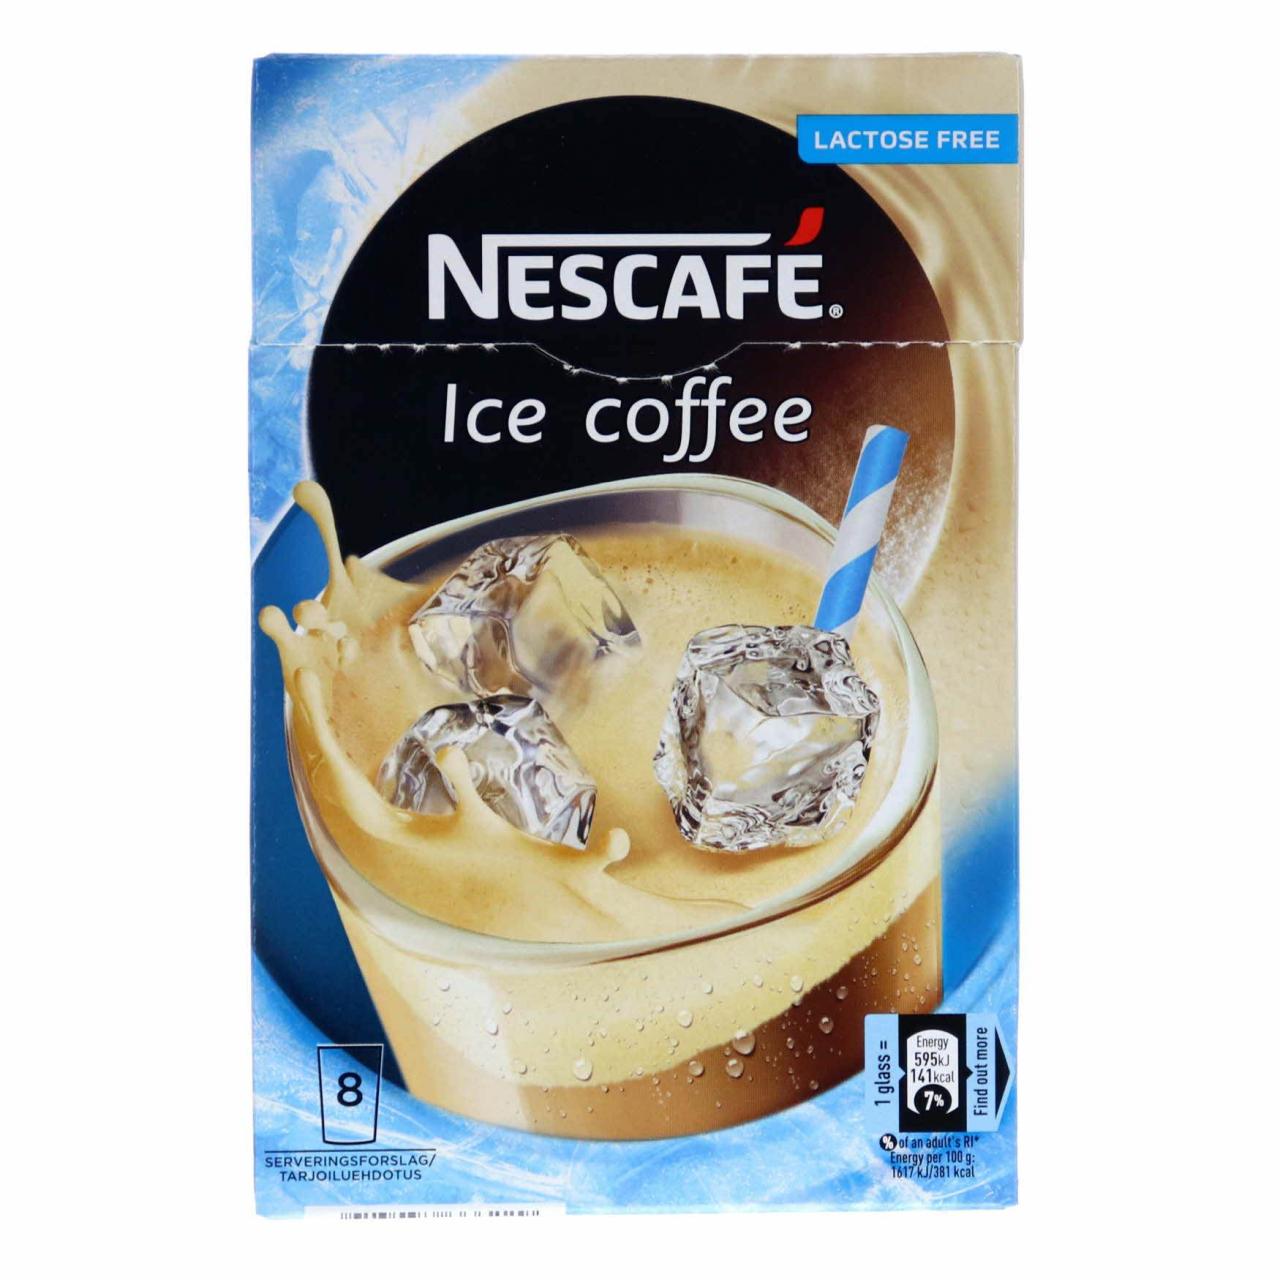 Nescafe Instant Ice Coffee Lactose free 8 Btl/128g